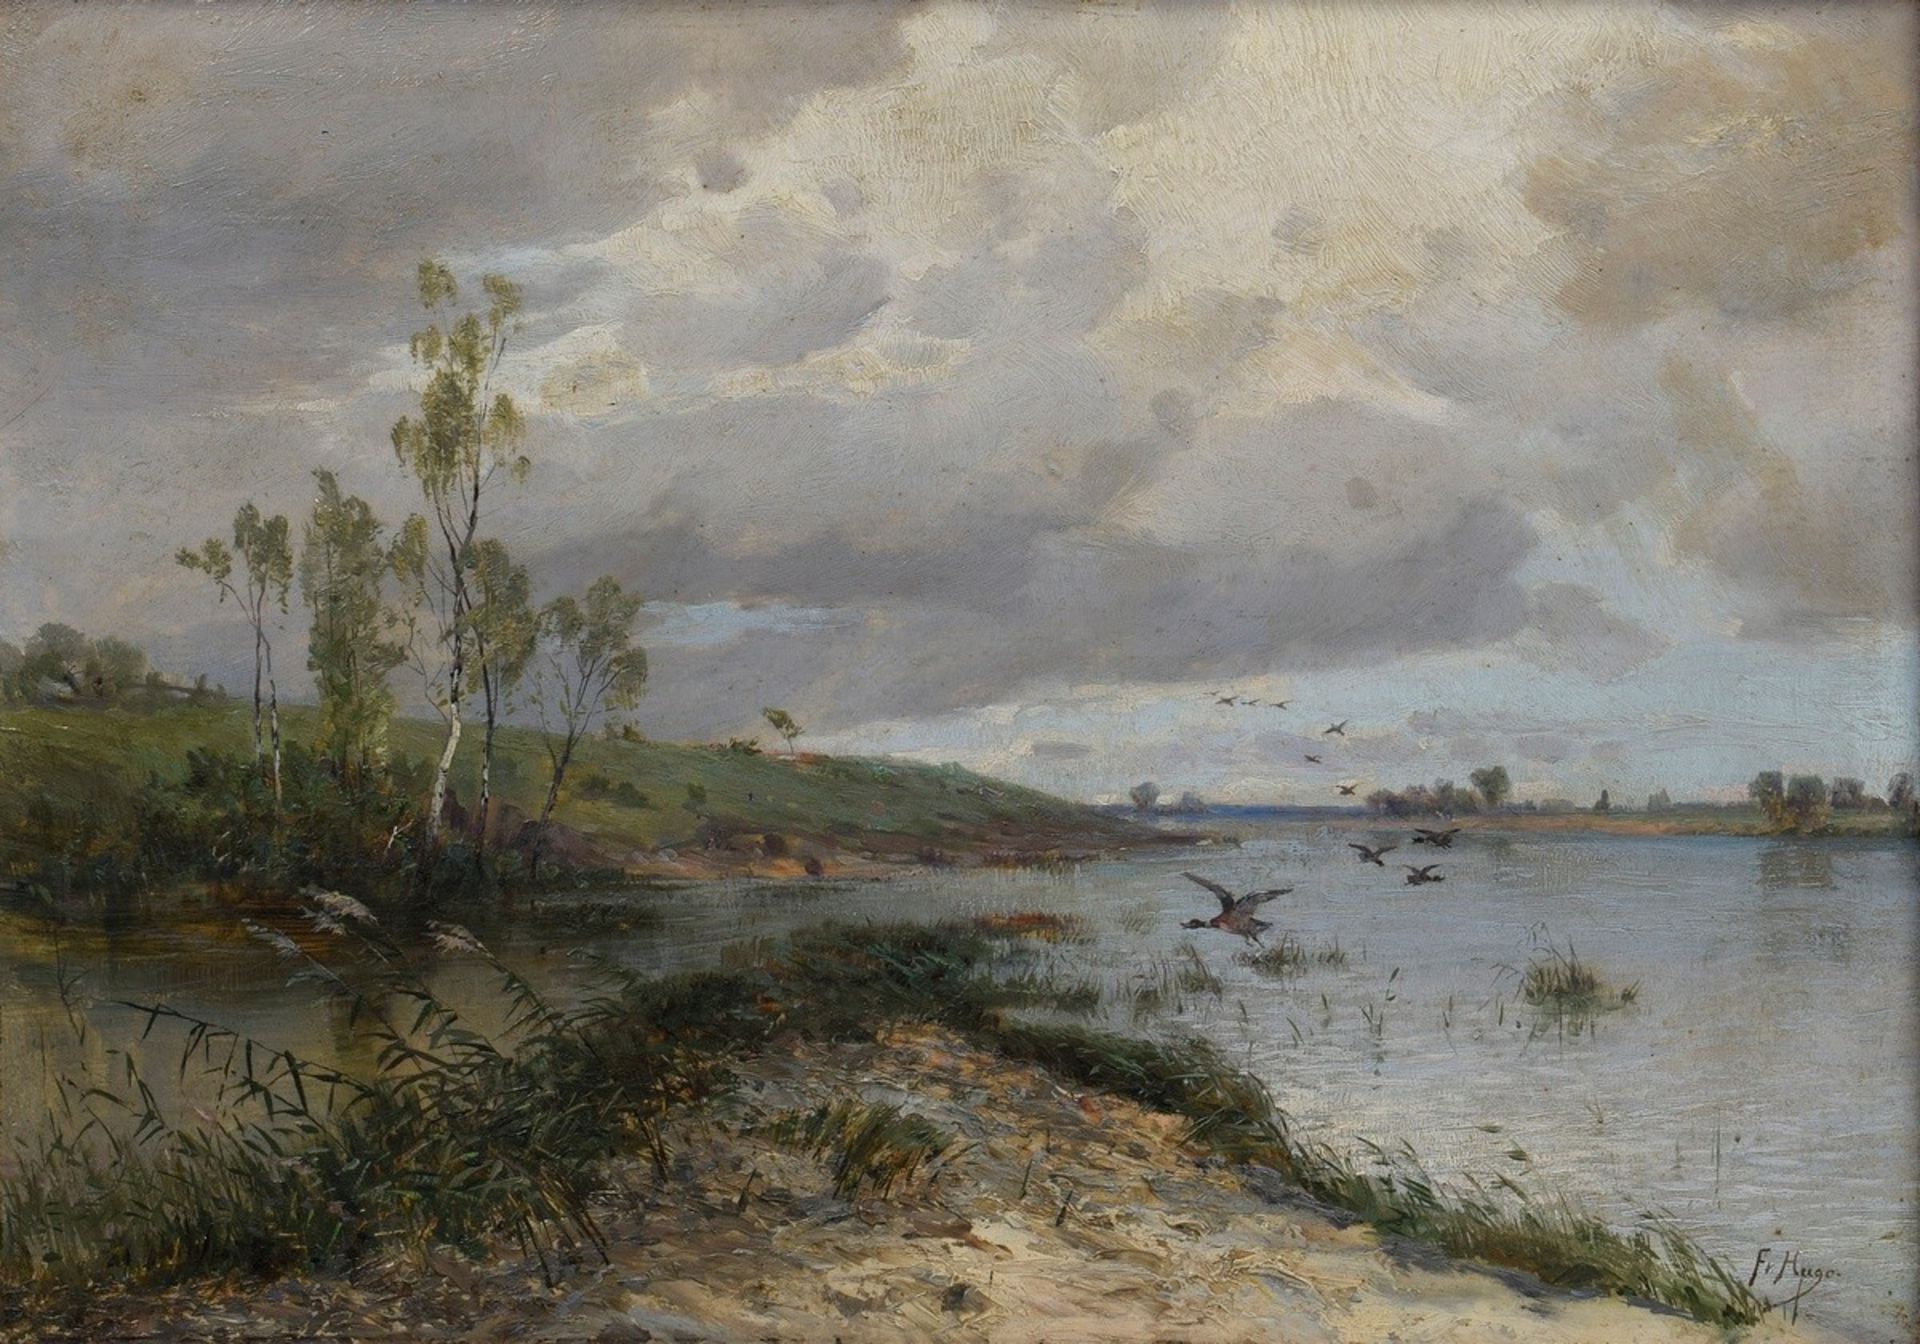 Unbekannter Künstler um 1900 (F. v. Hugo ?) "An der Weser" (Einfliegende Enten), Öl/Malpappe, u.r. 